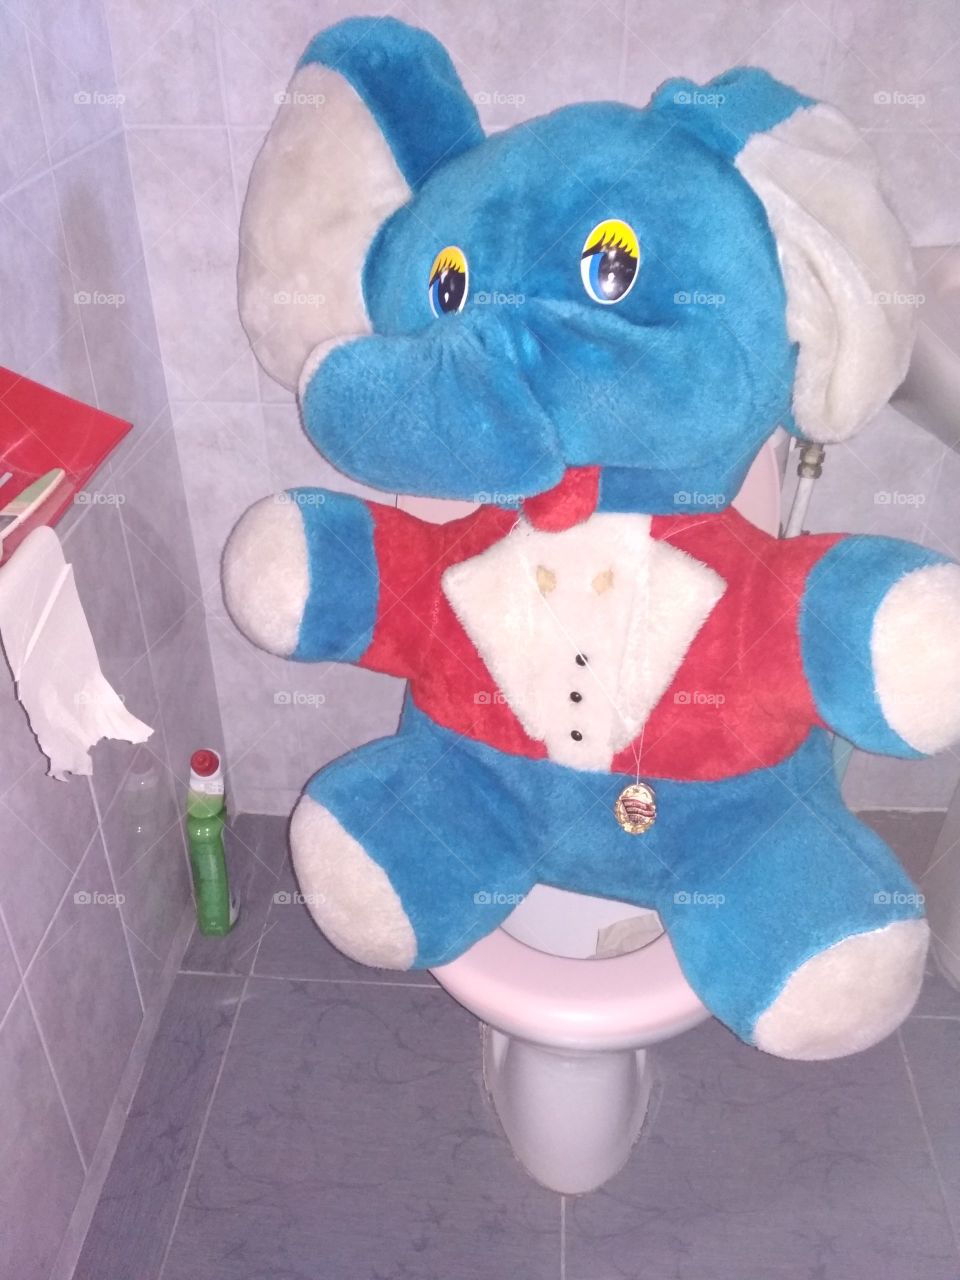 elephant on the toilet